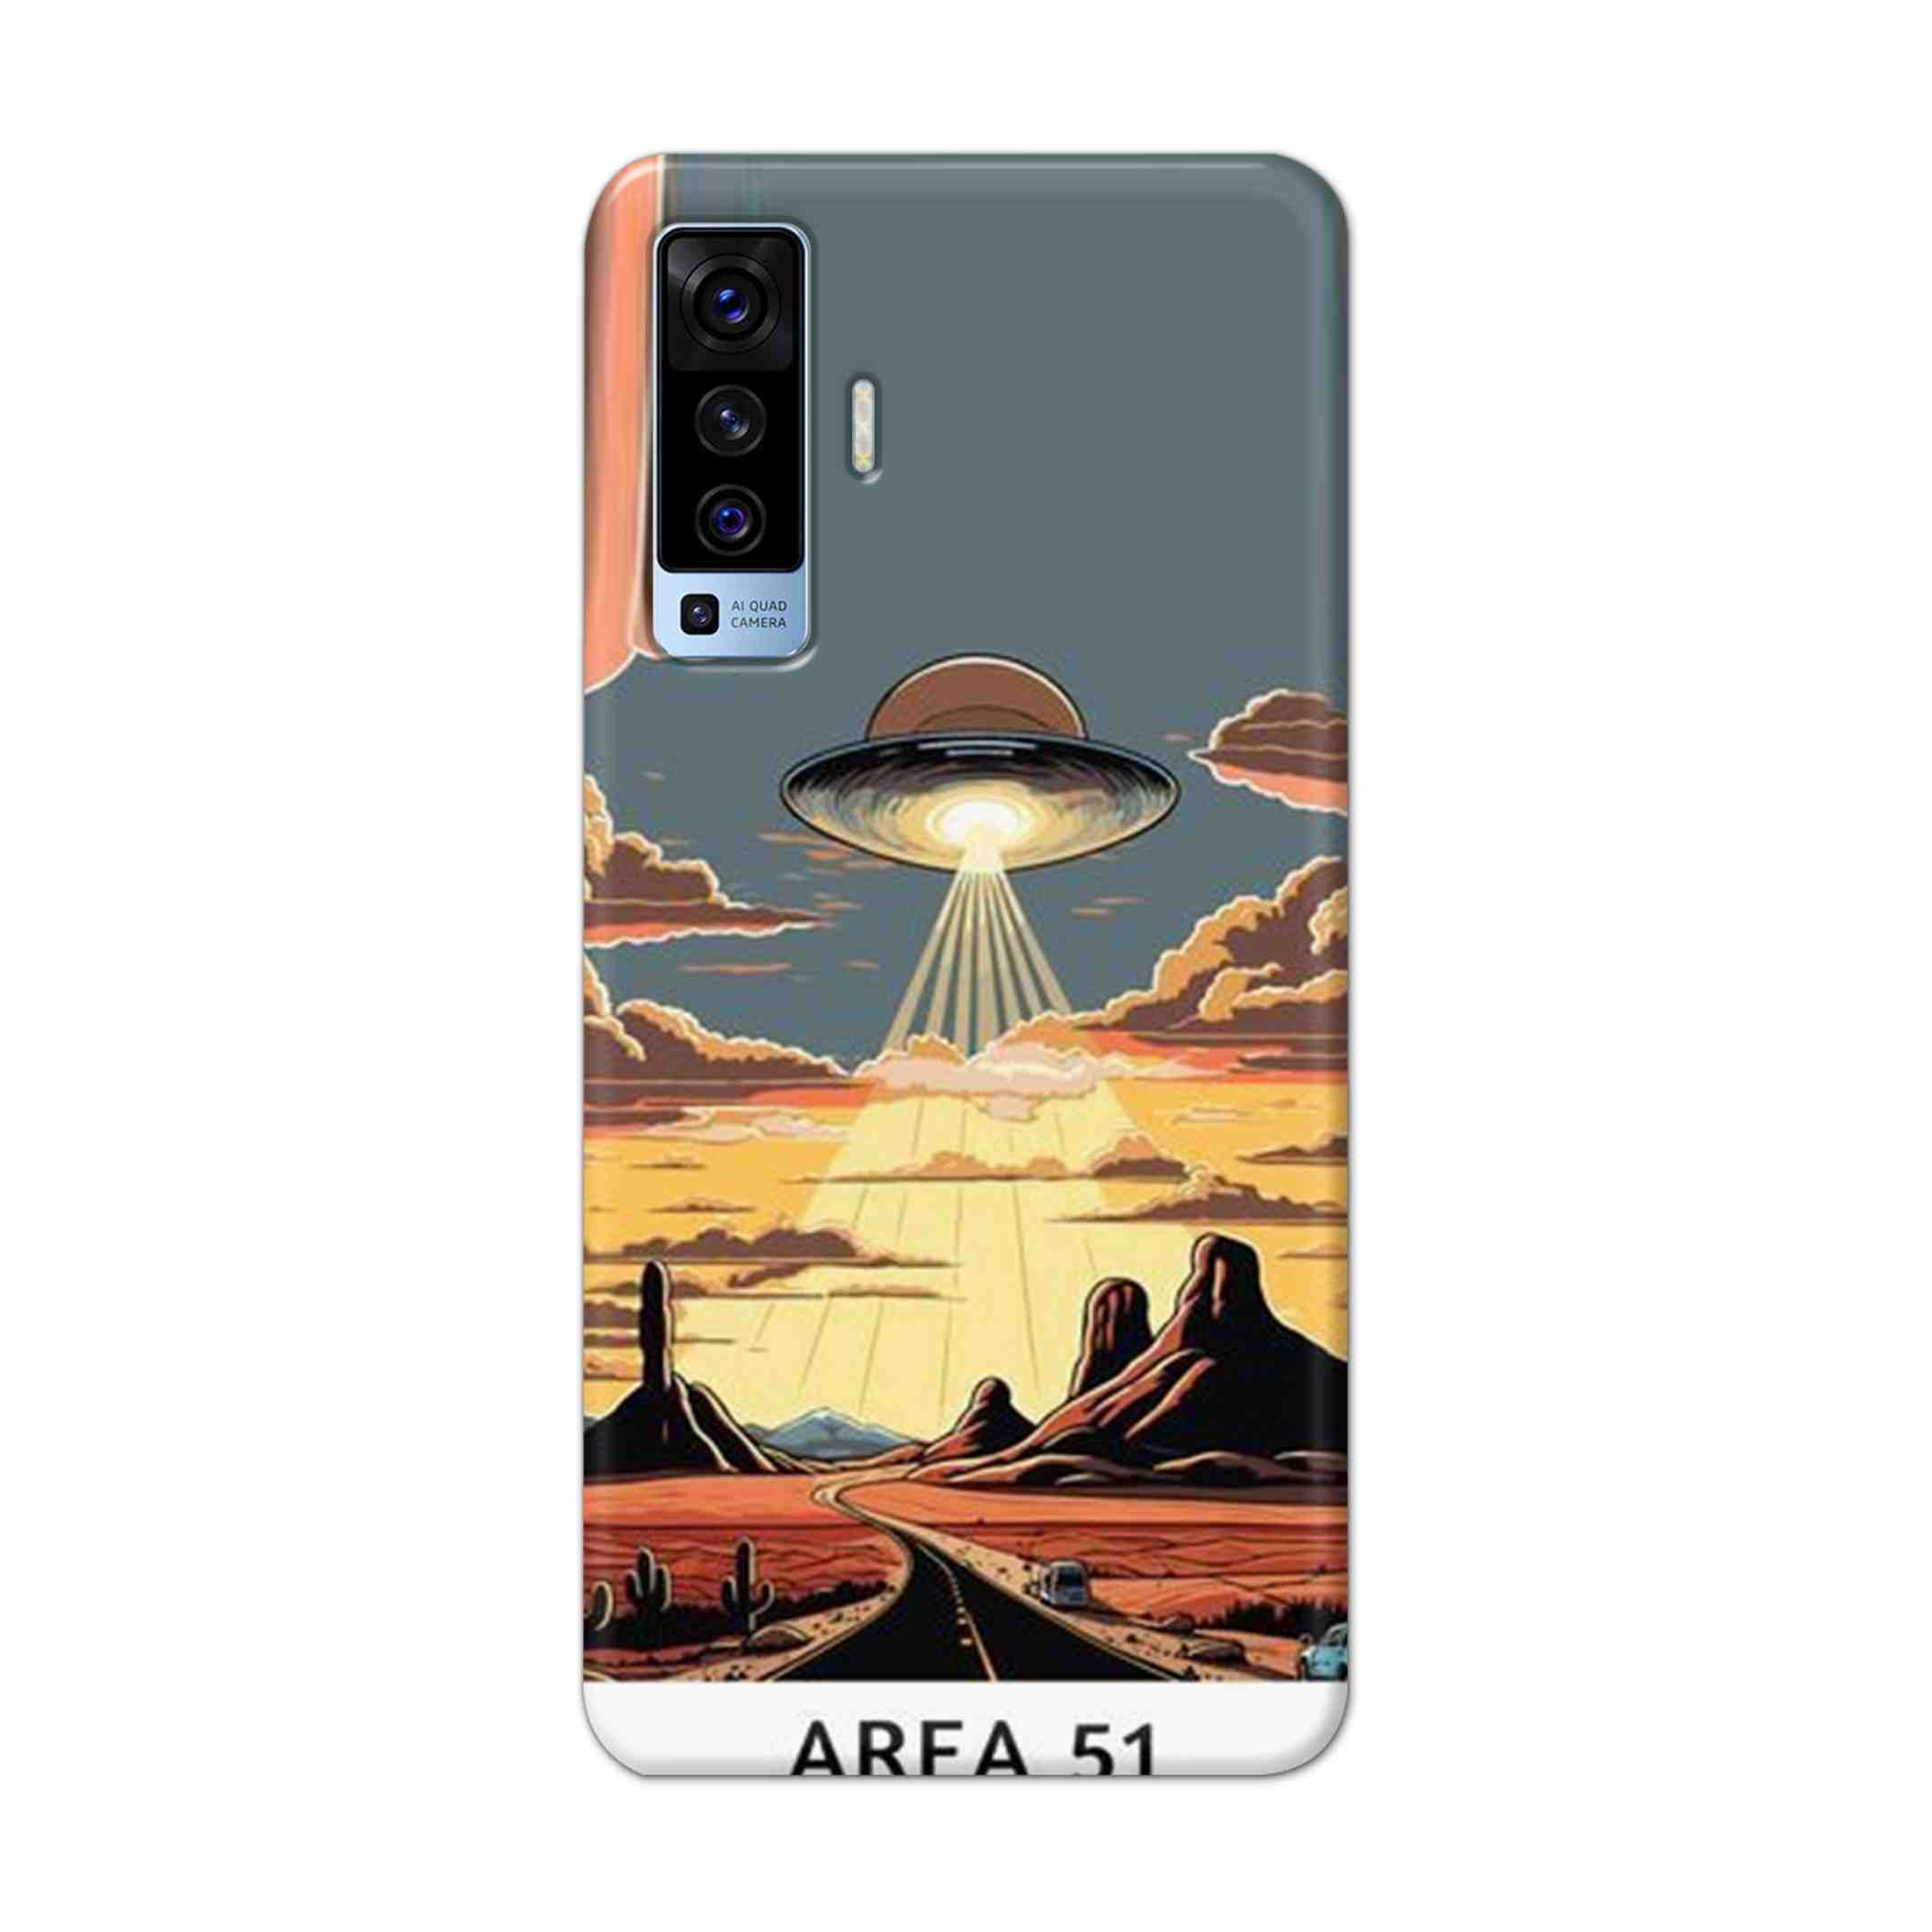 Buy Area 51 Hard Back Mobile Phone Case Cover For Vivo X50 Online